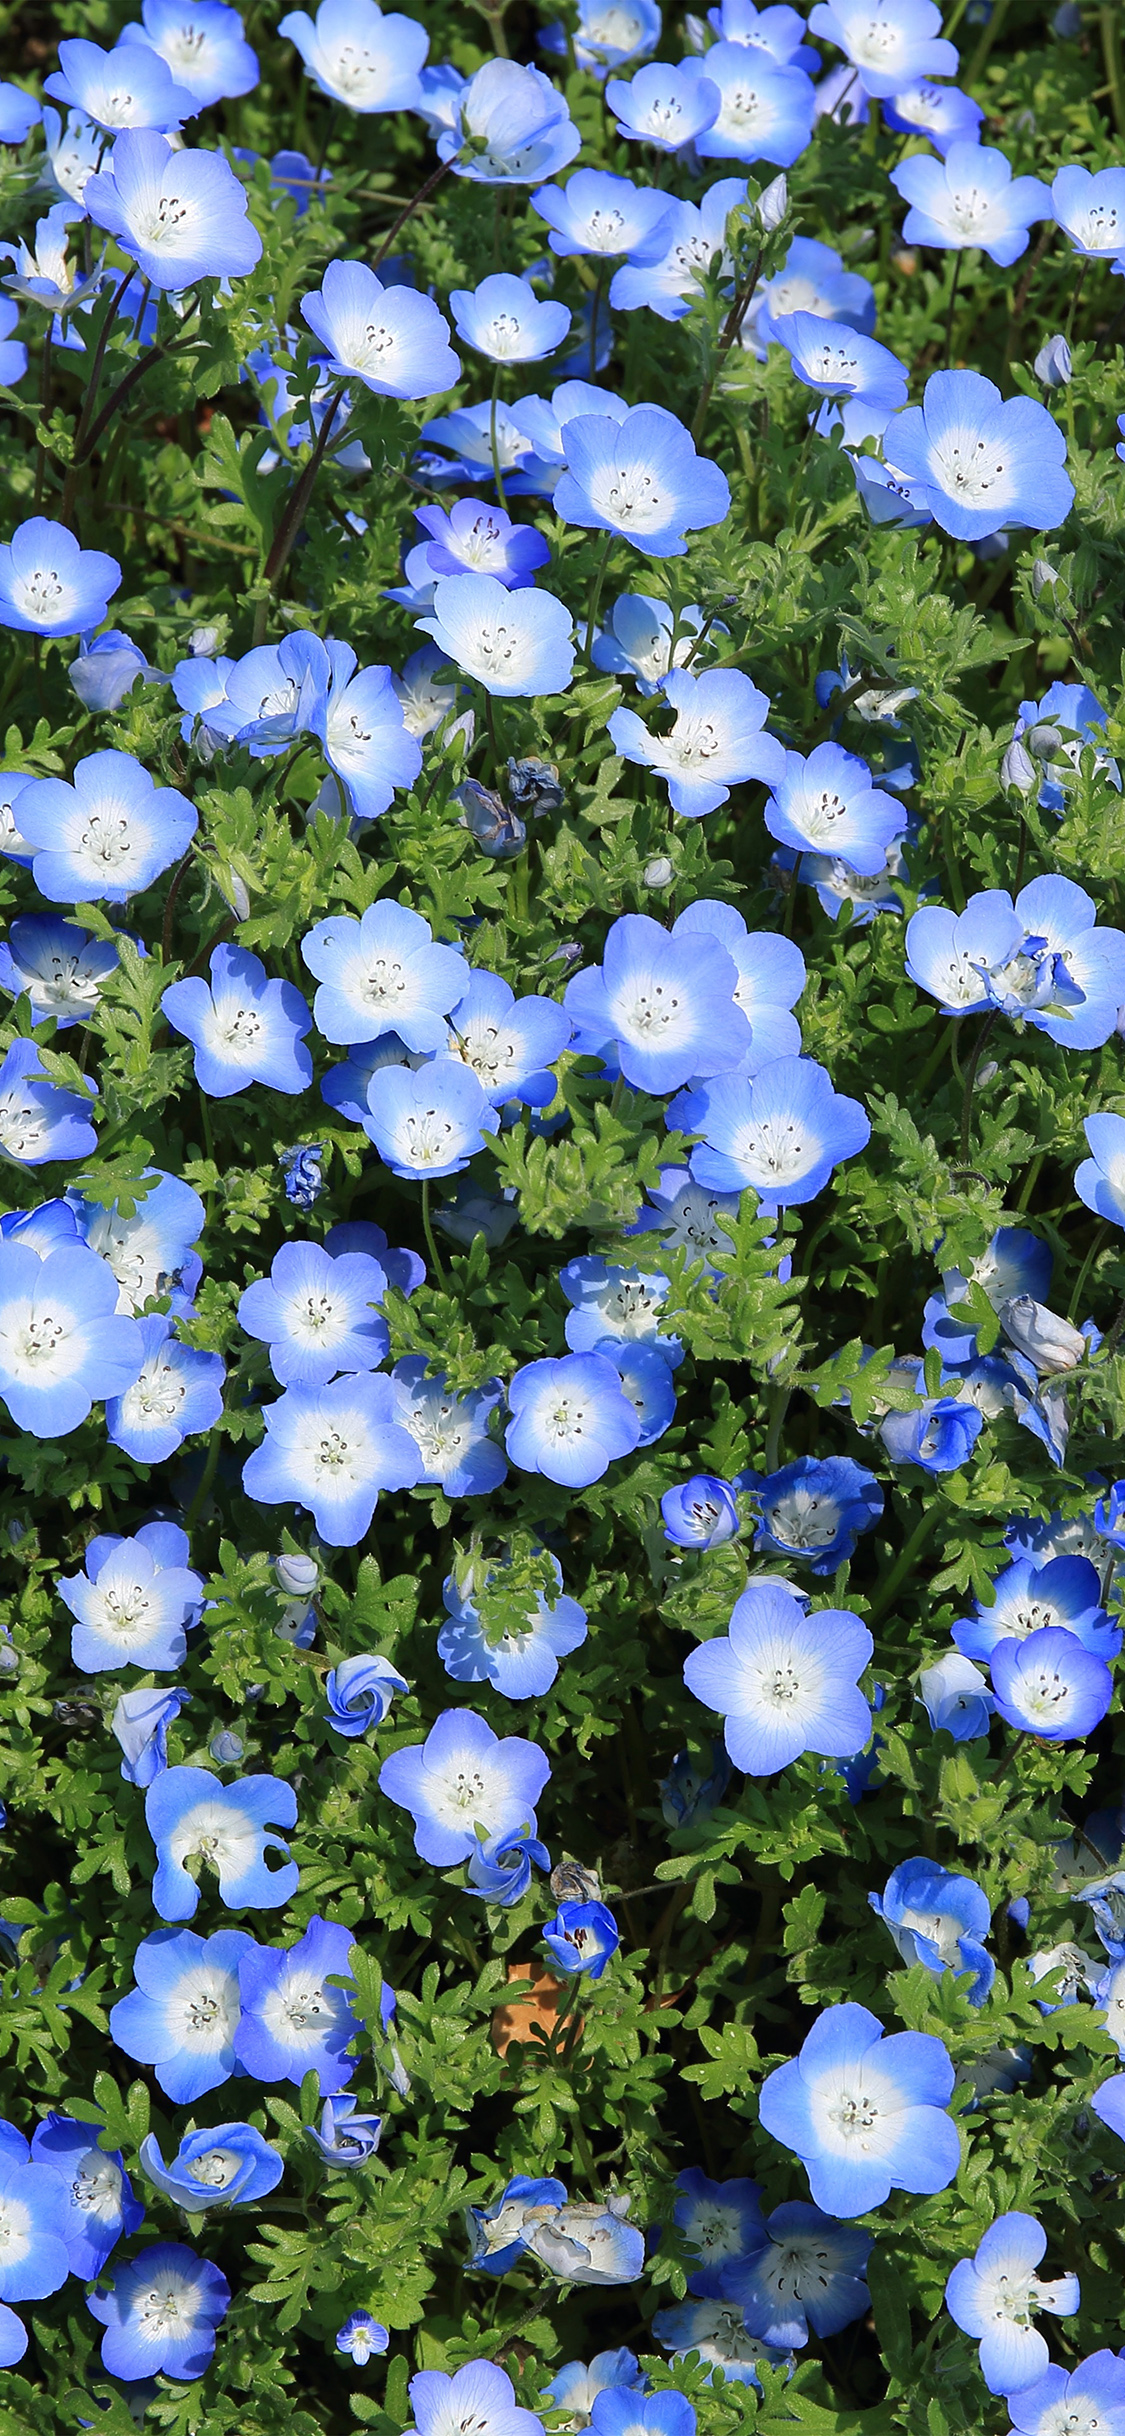 iPhone X wallpaper. flower spring blue nature